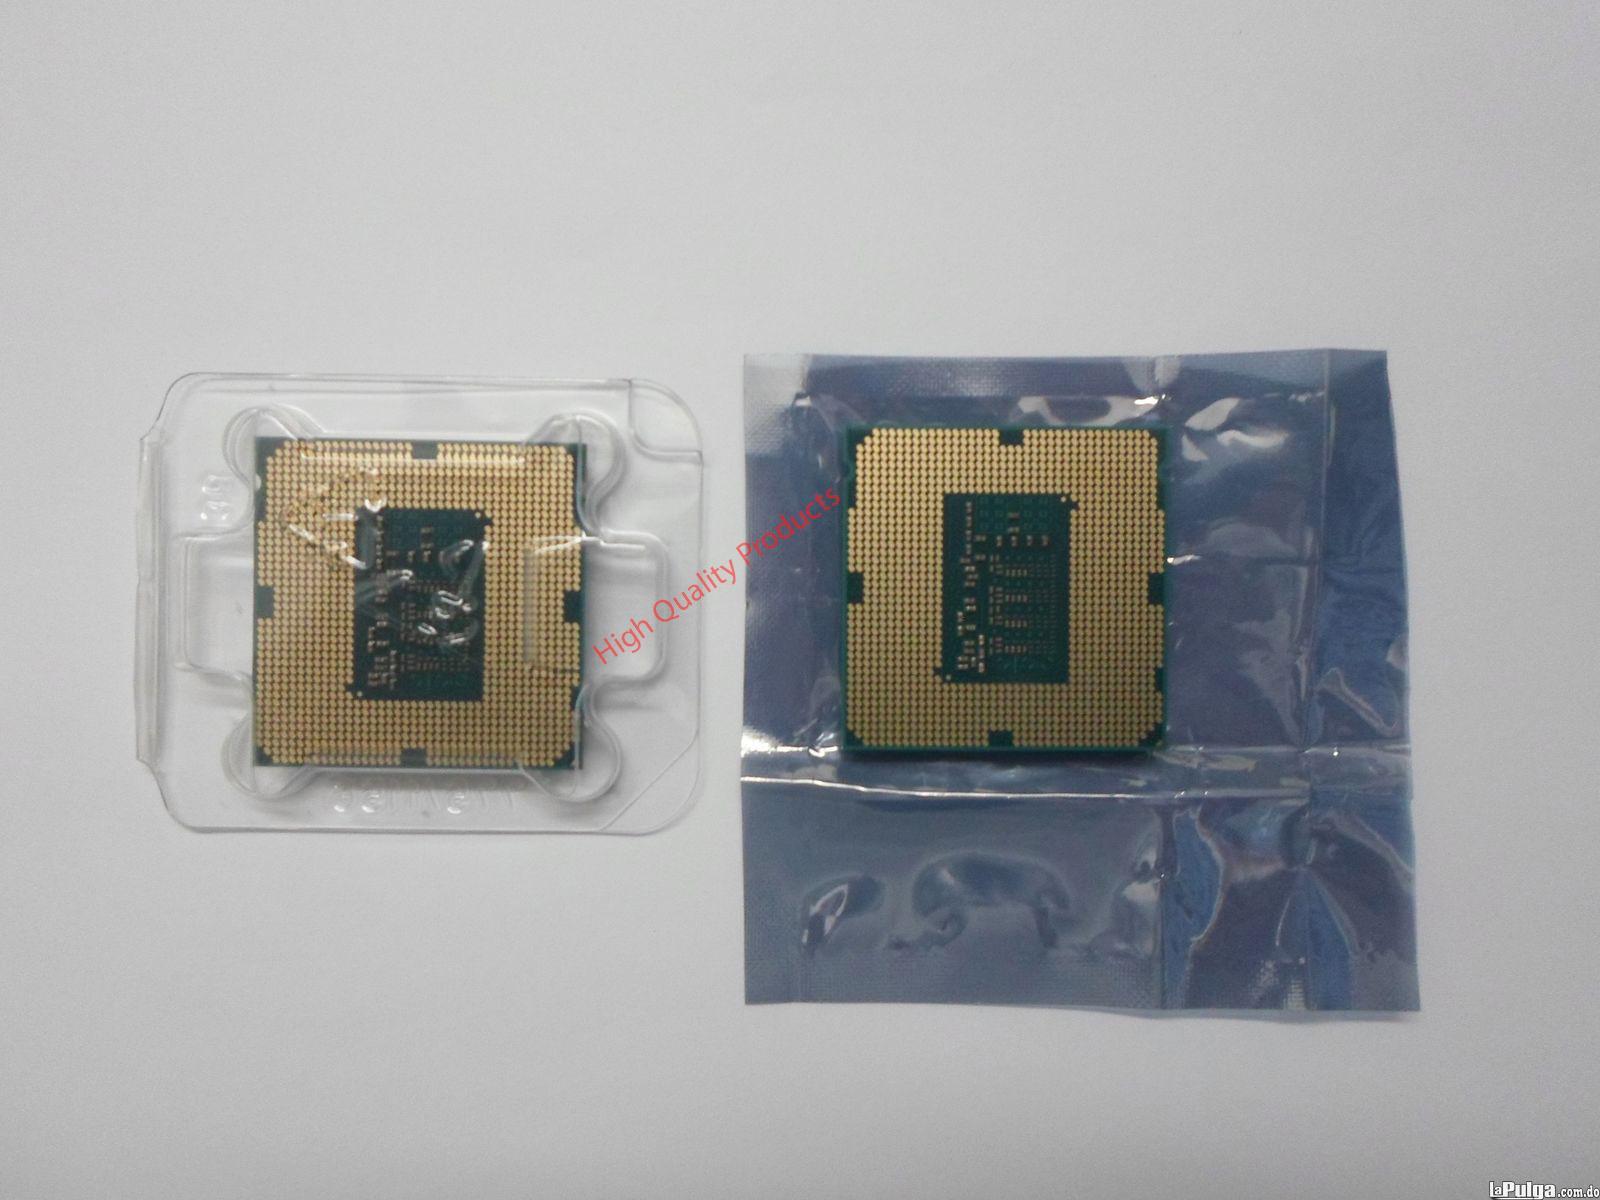 -----Procesador Intel Xeon E3-1225 v3 Socket 1150 3.20GHz Foto 7137500-2.jpg